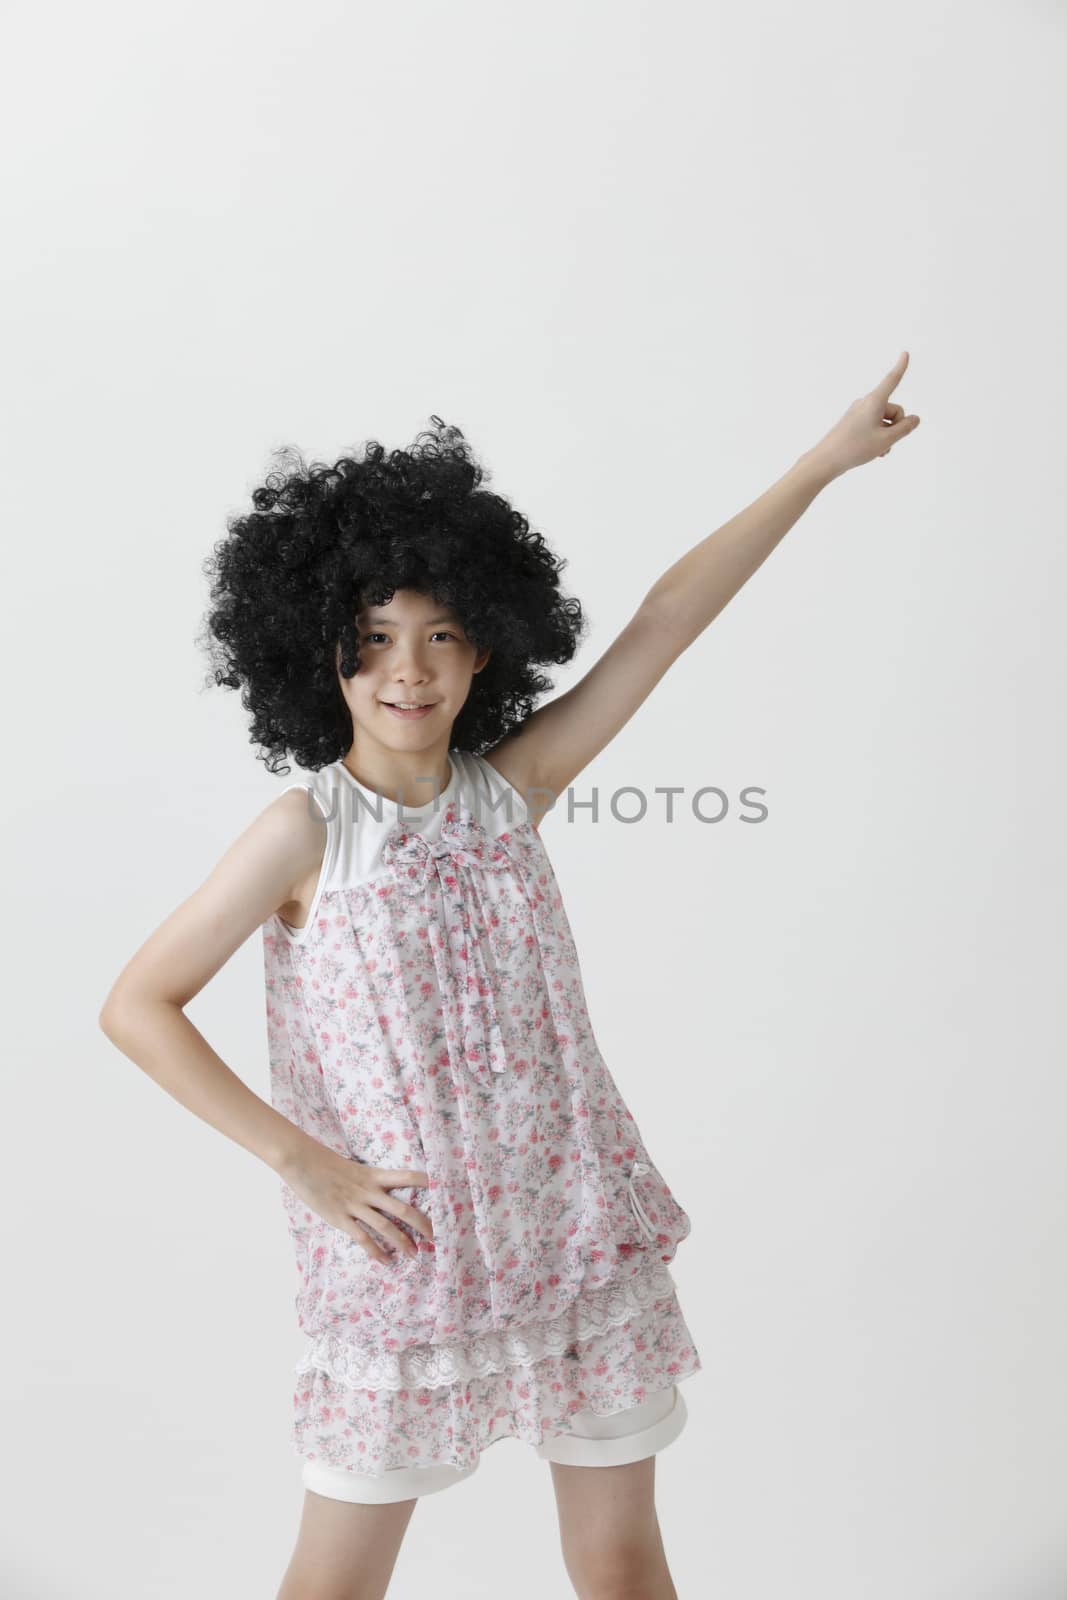 chinese girl wearing a big black wig dancing